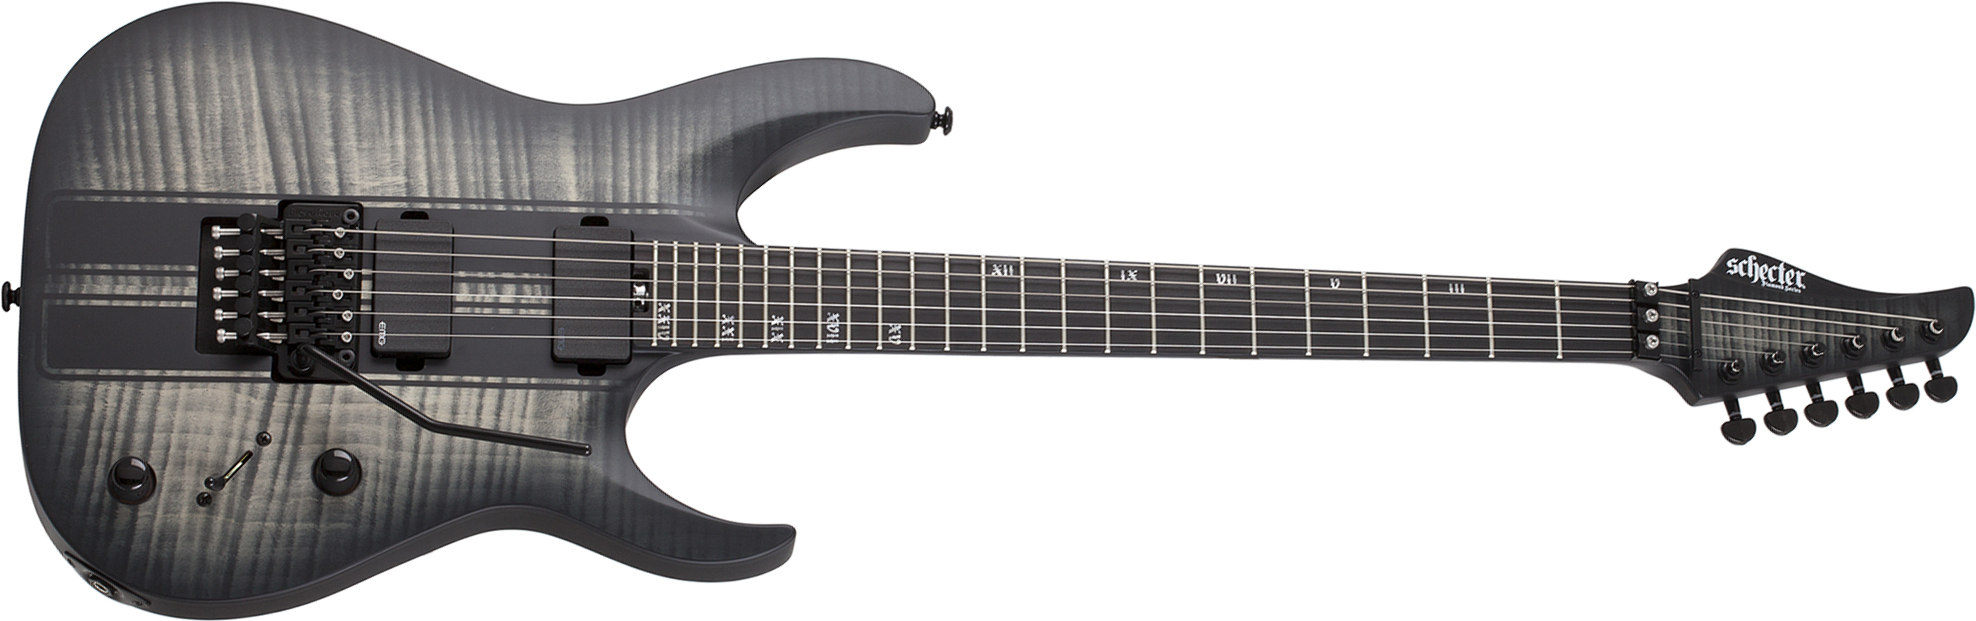 Schecter Banshee Gt Fr 2h Emg Eb - Satin Charcoal Burst - Str shape electric guitar - Main picture